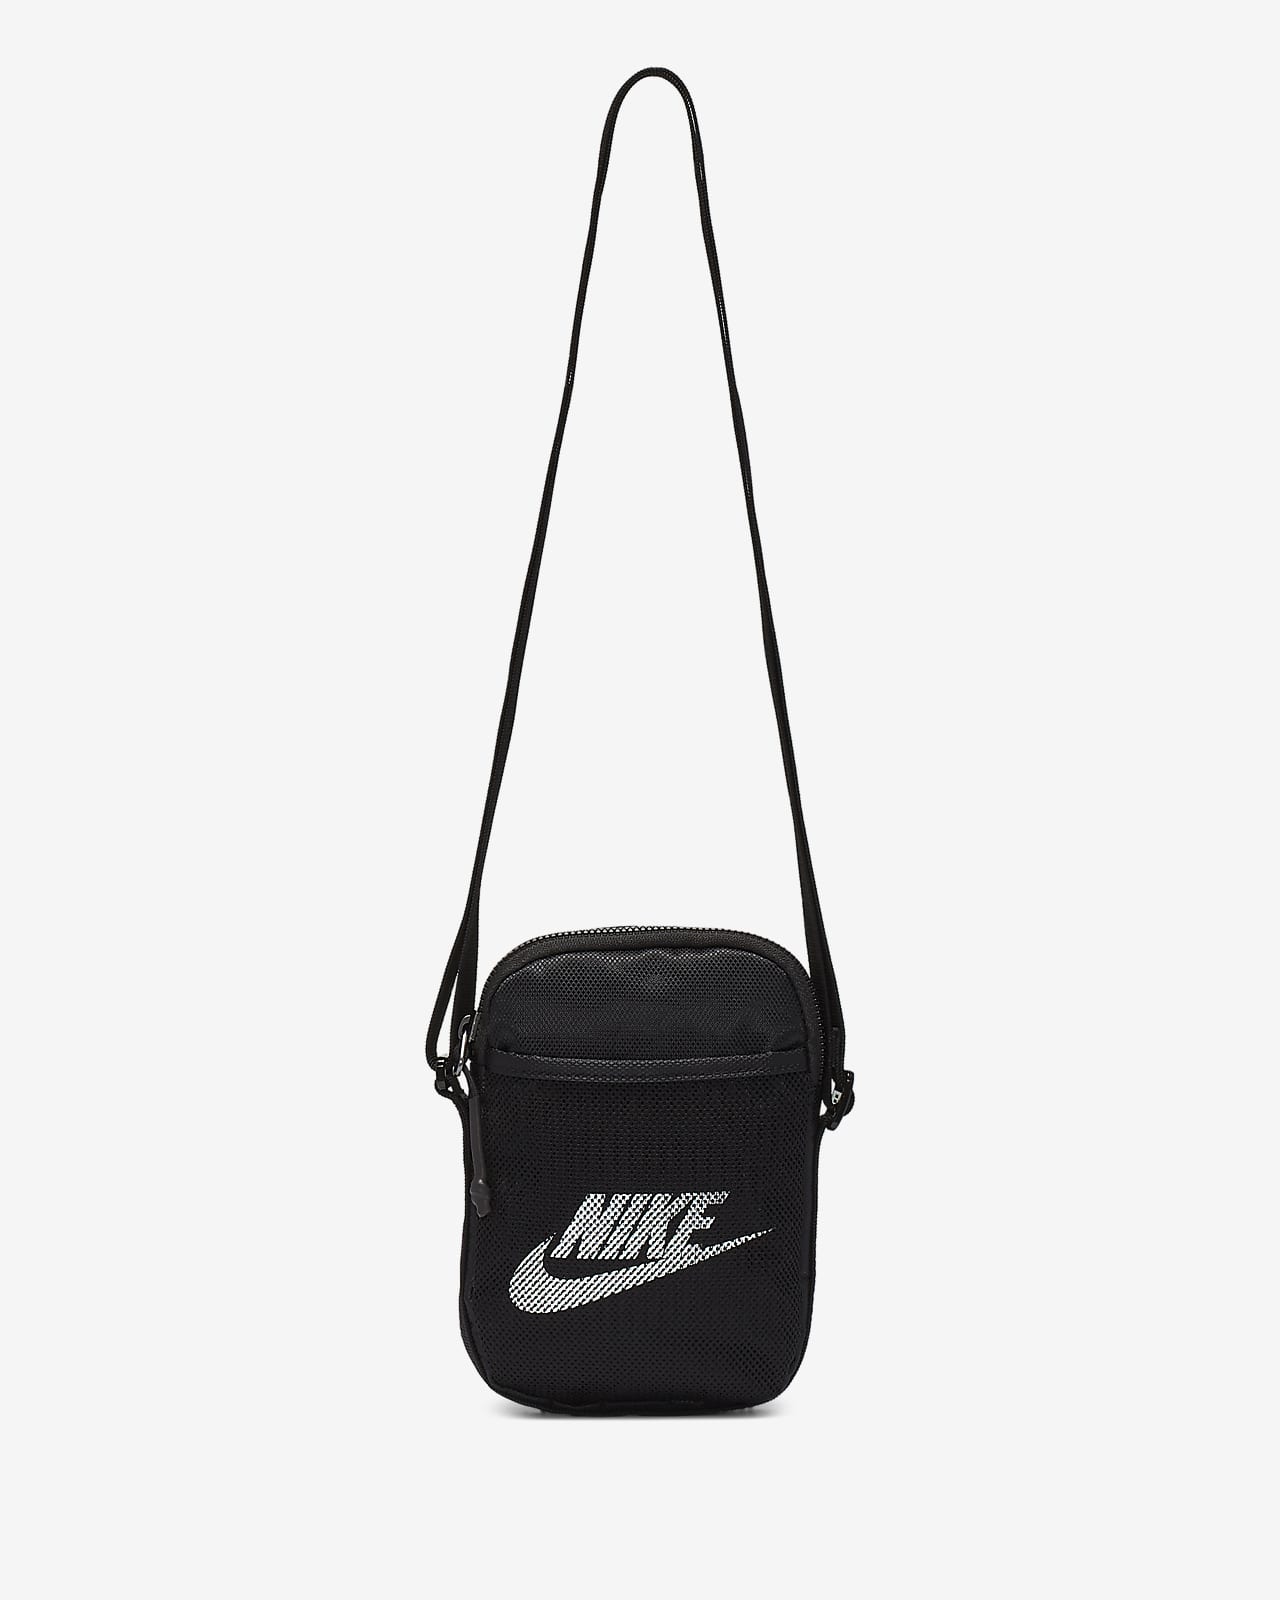 Nike Backpack Cream Gray Plaid 72 Zip Closure Adjustable Straps. P7 | eBay